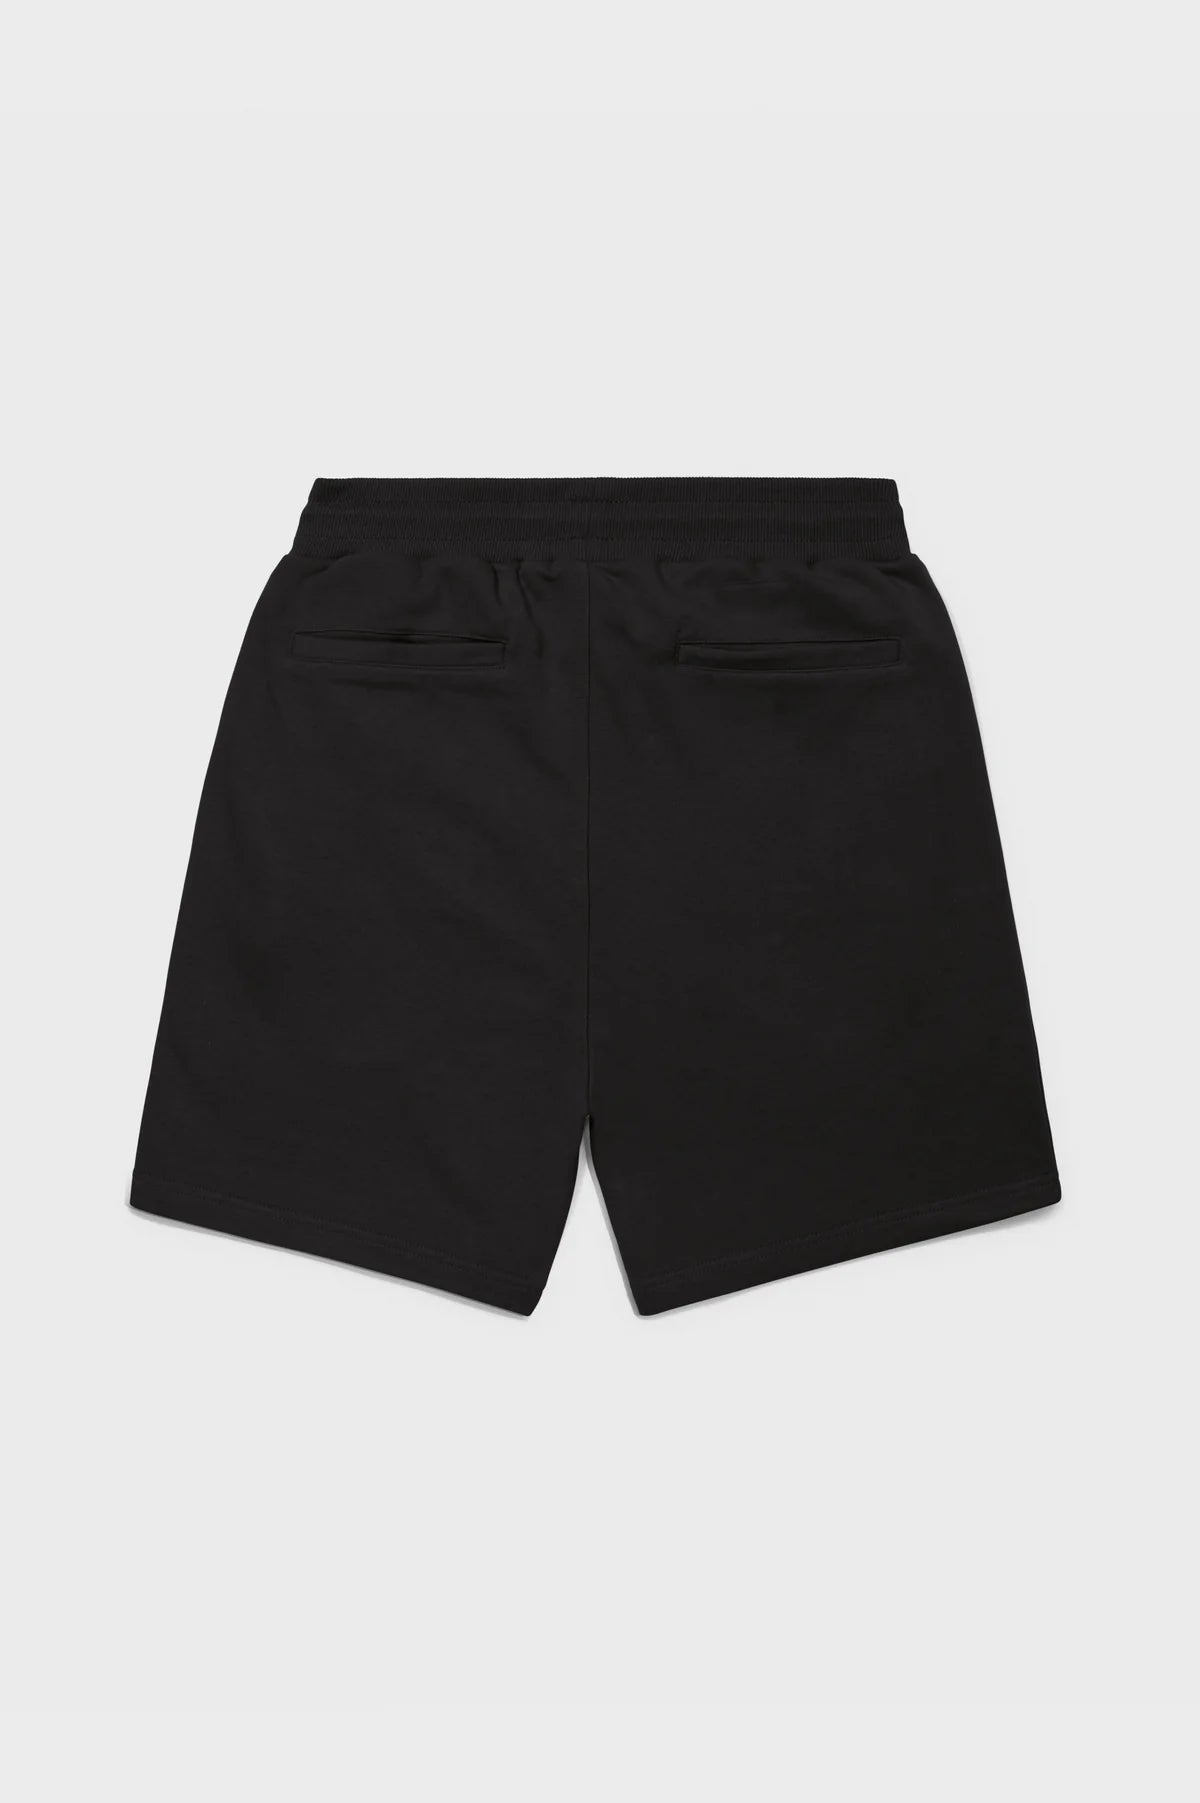 Equalite societé oversized shorts - black